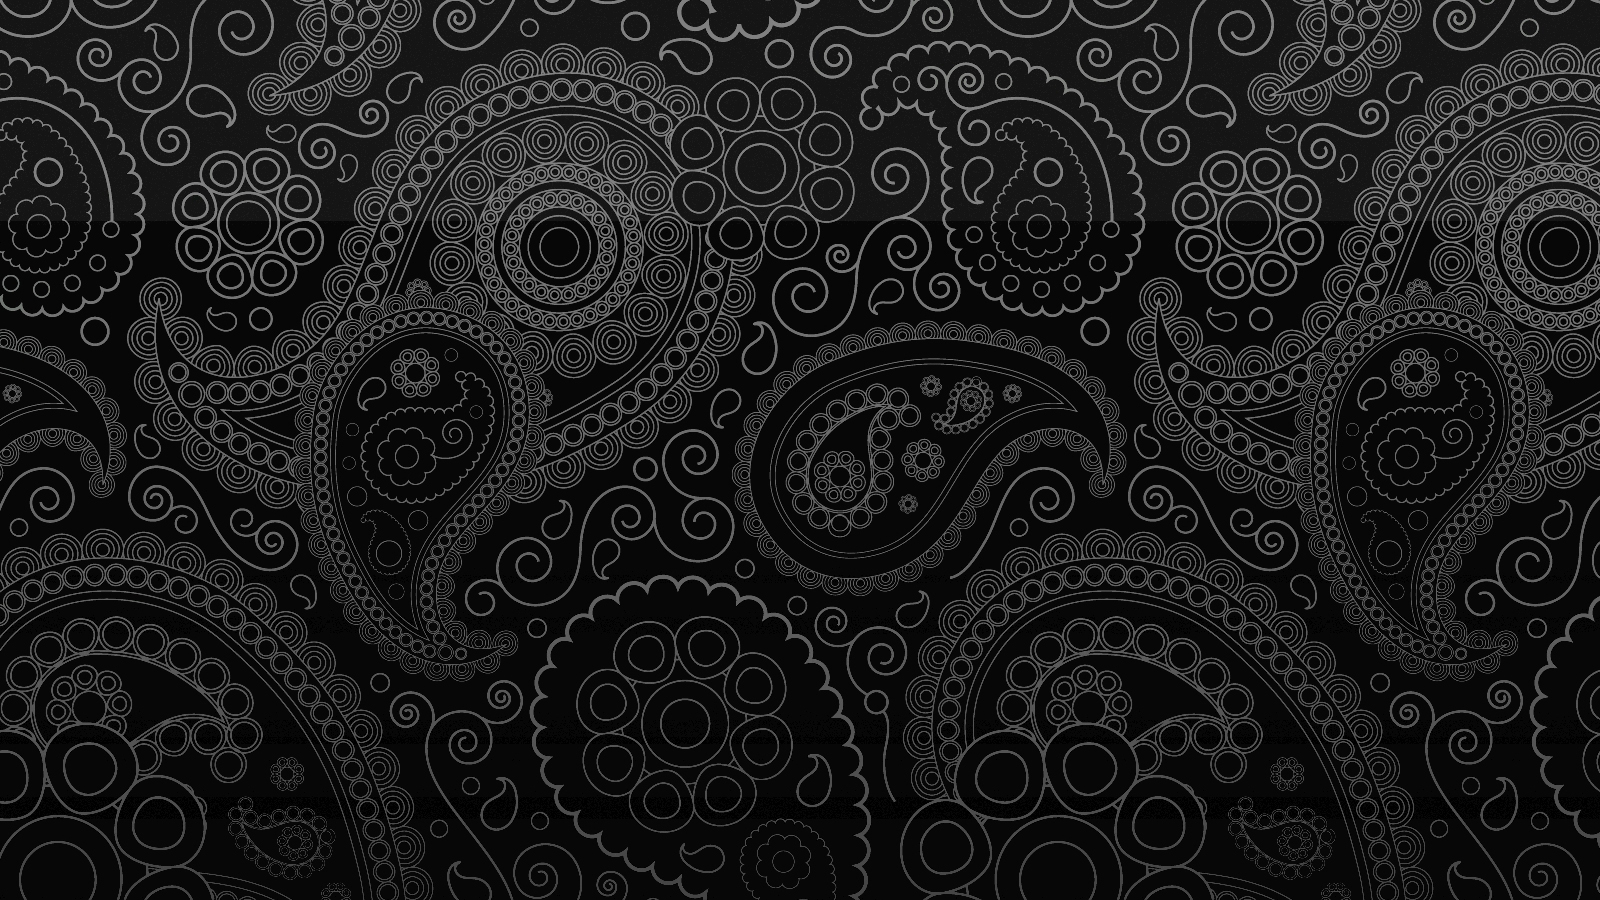 Black Paisley Wallpaper